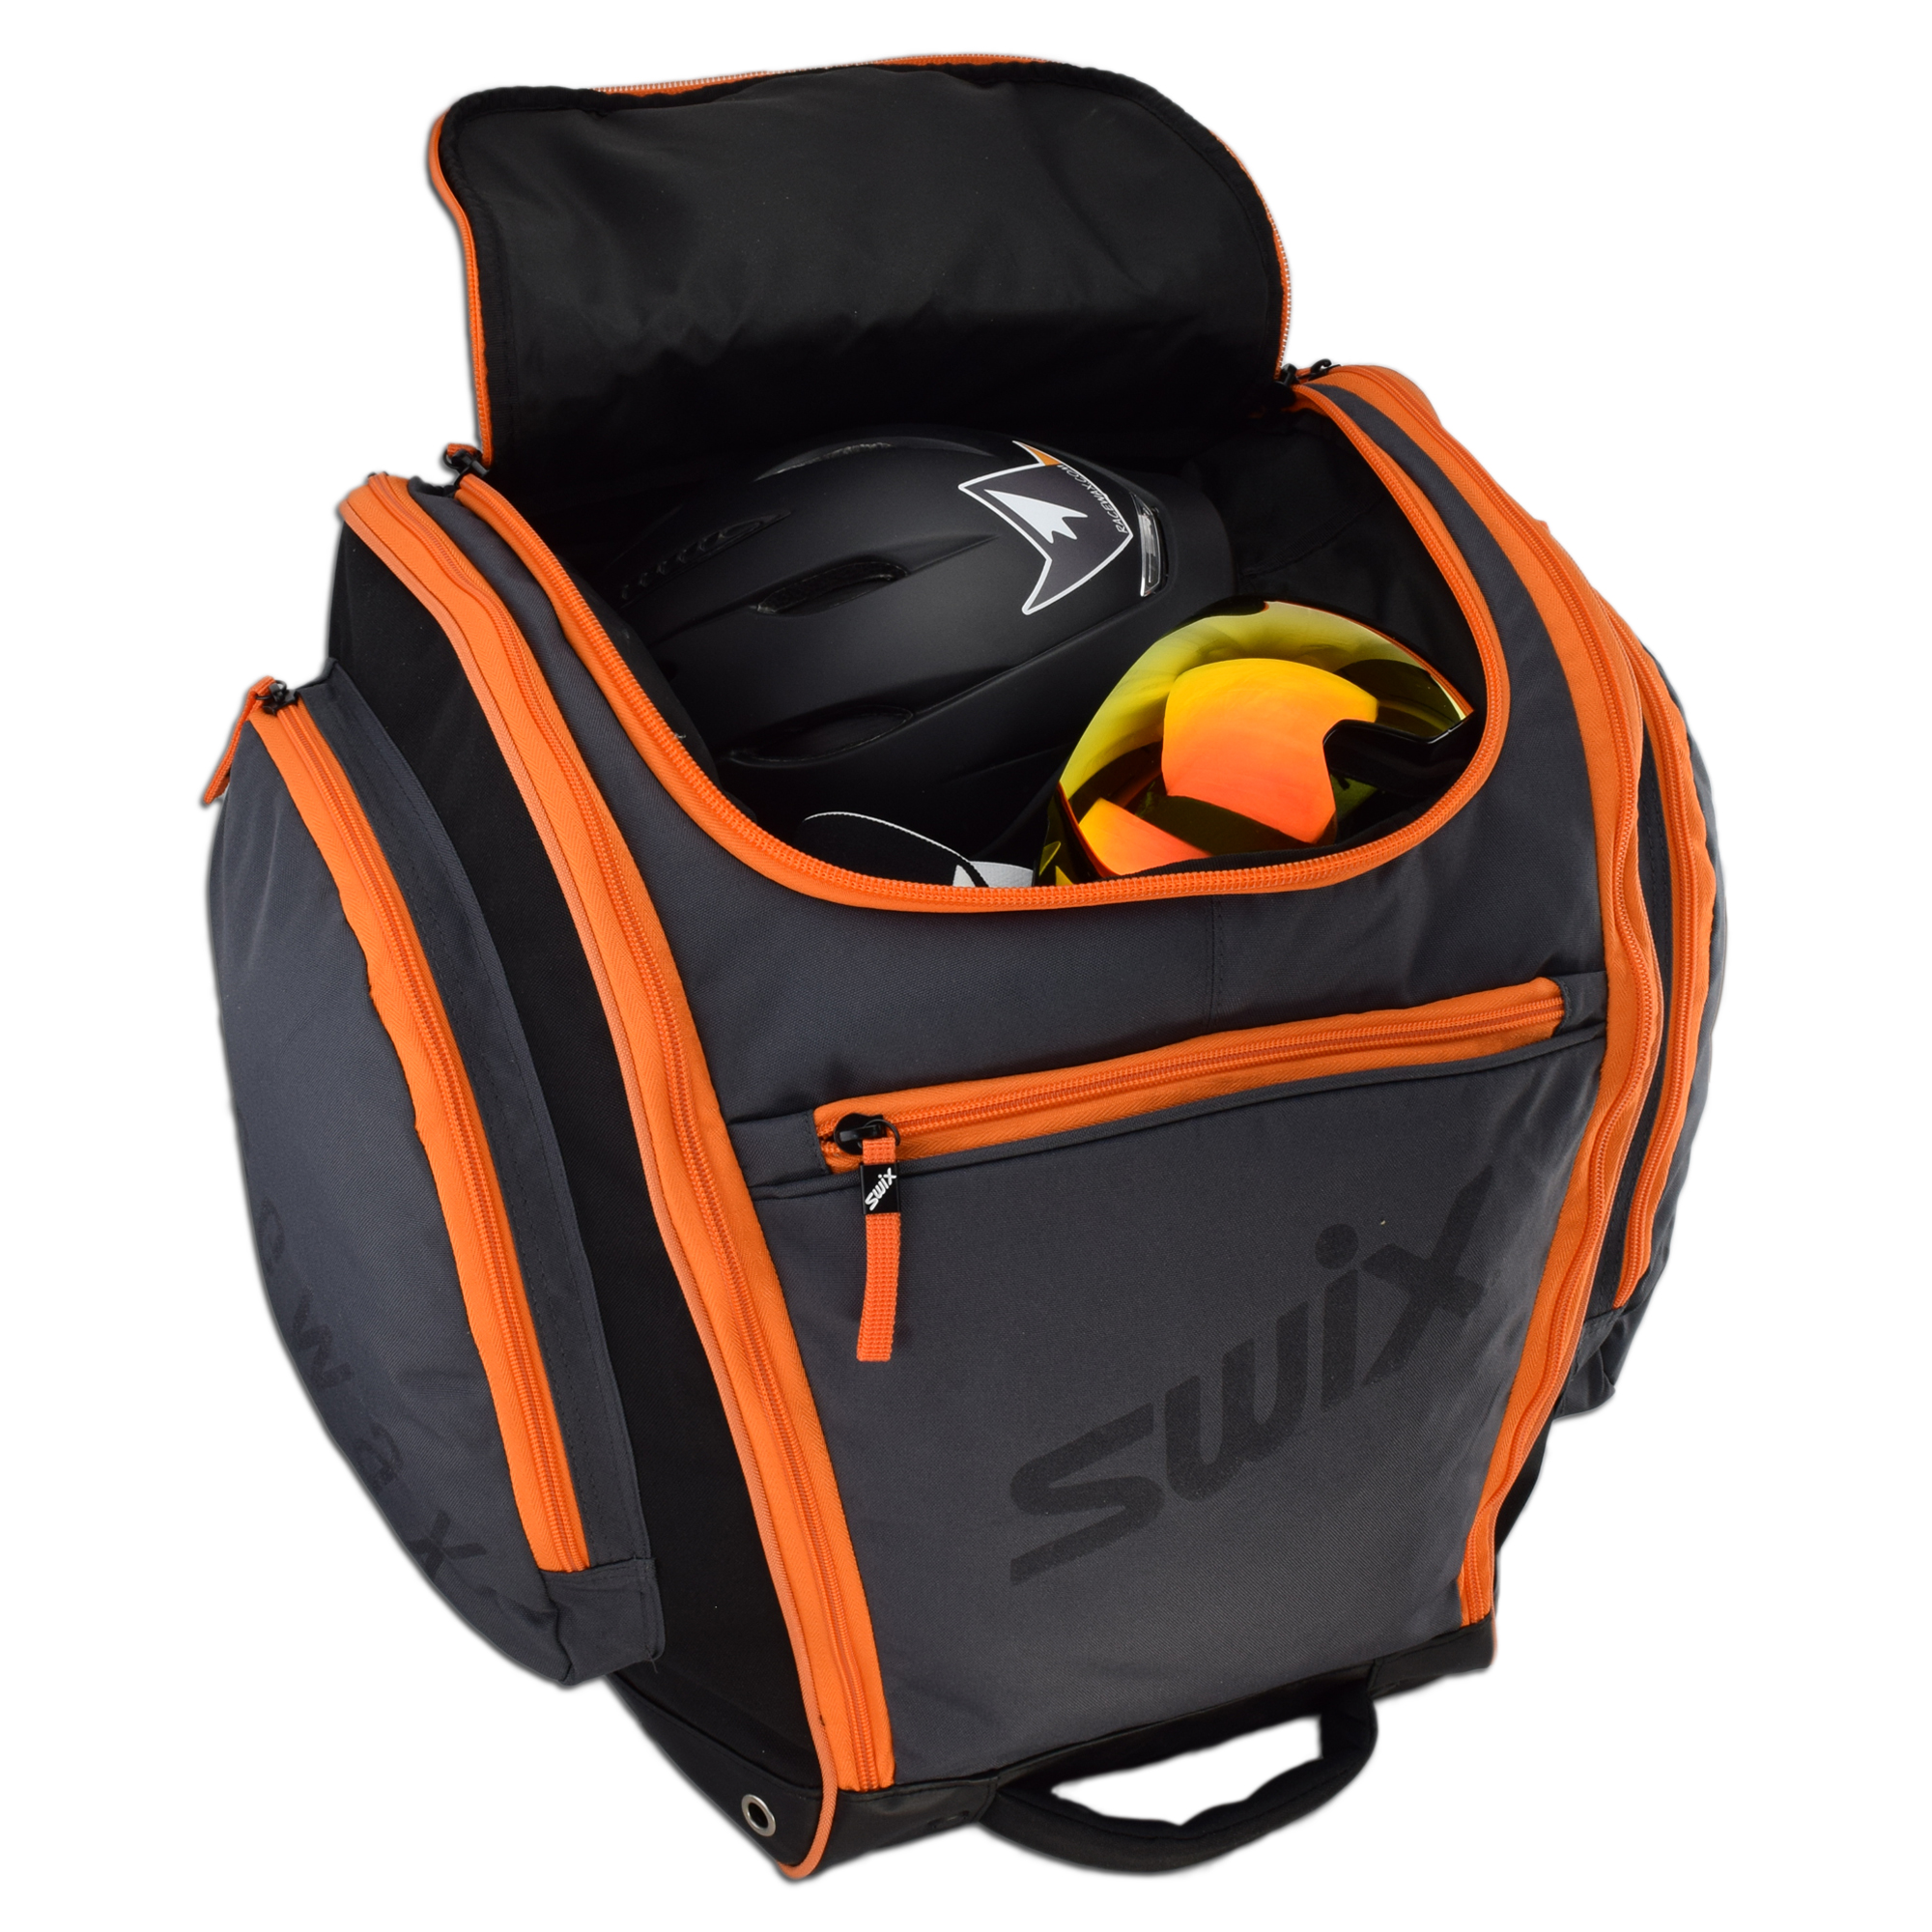 Racewax 65 Liter Ski Boot Bag for sale online 